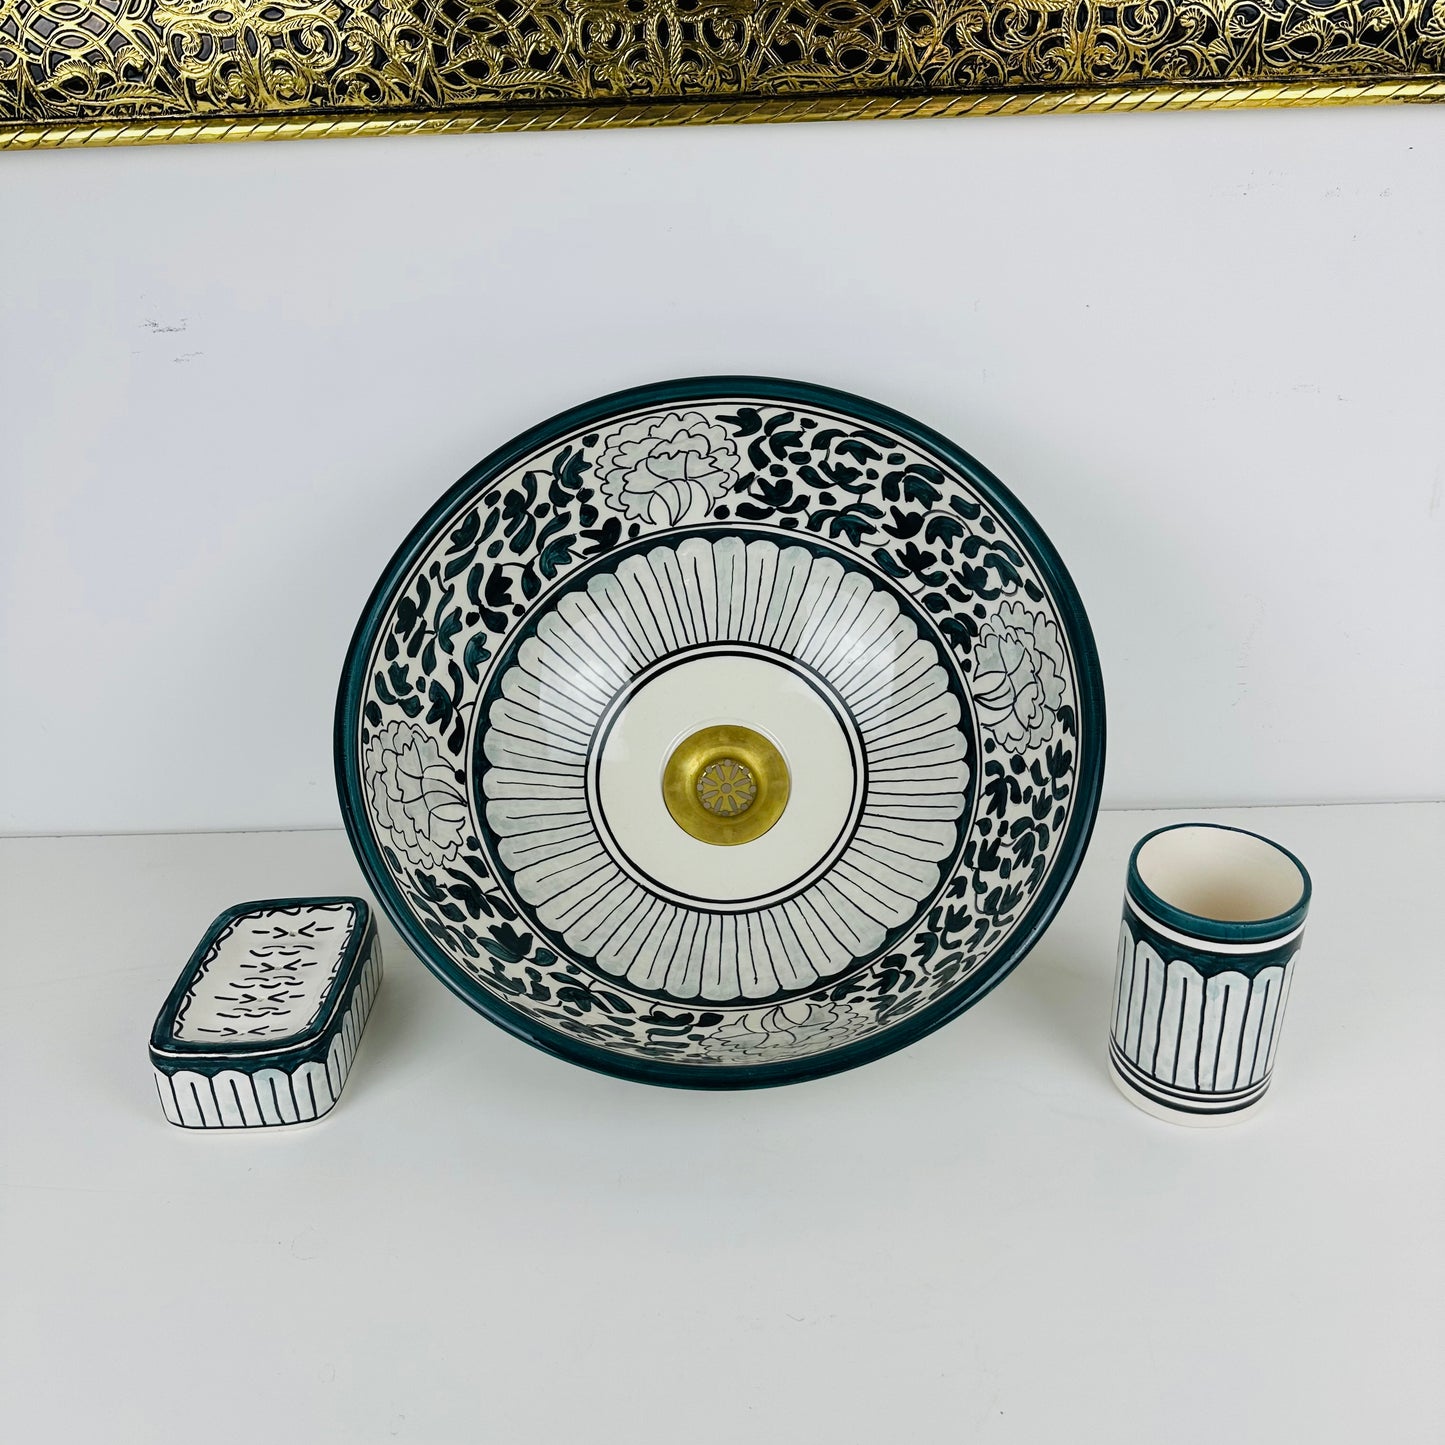 Verdant Bloom: Handcrafted Ceramic Sink with Dark Green Floral Motif